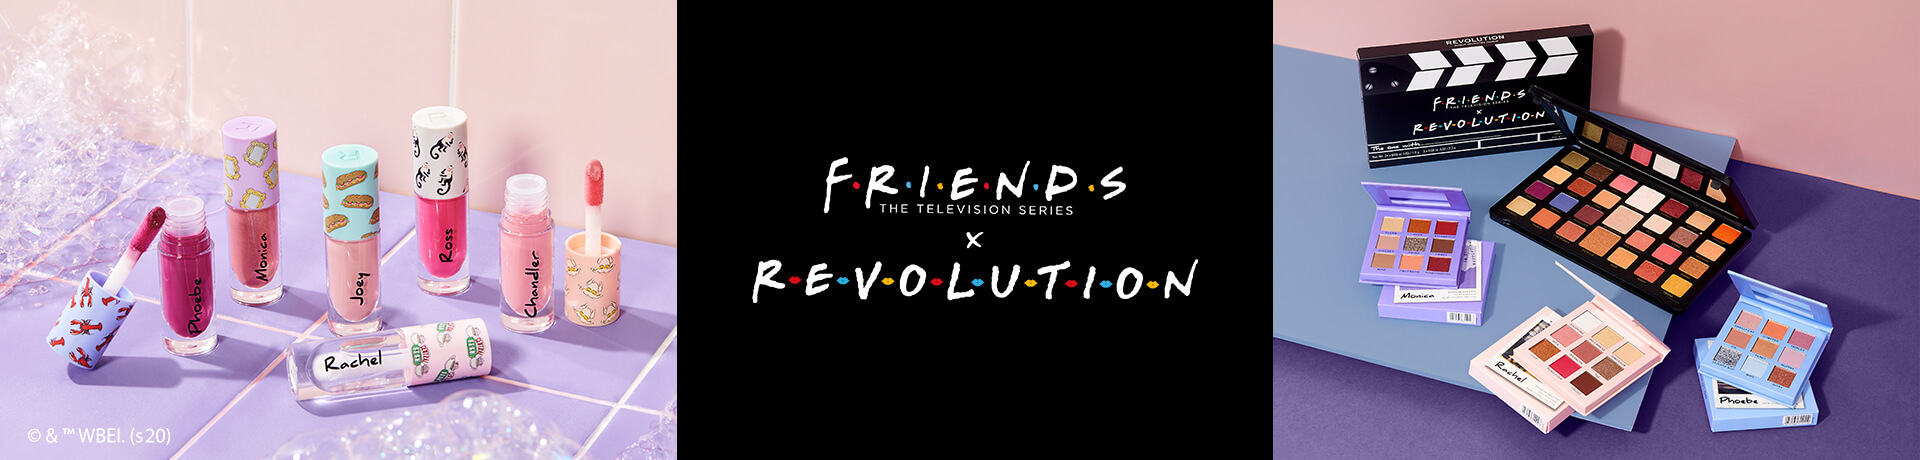 Oh. My. God. Friends x Revolution ist DA!